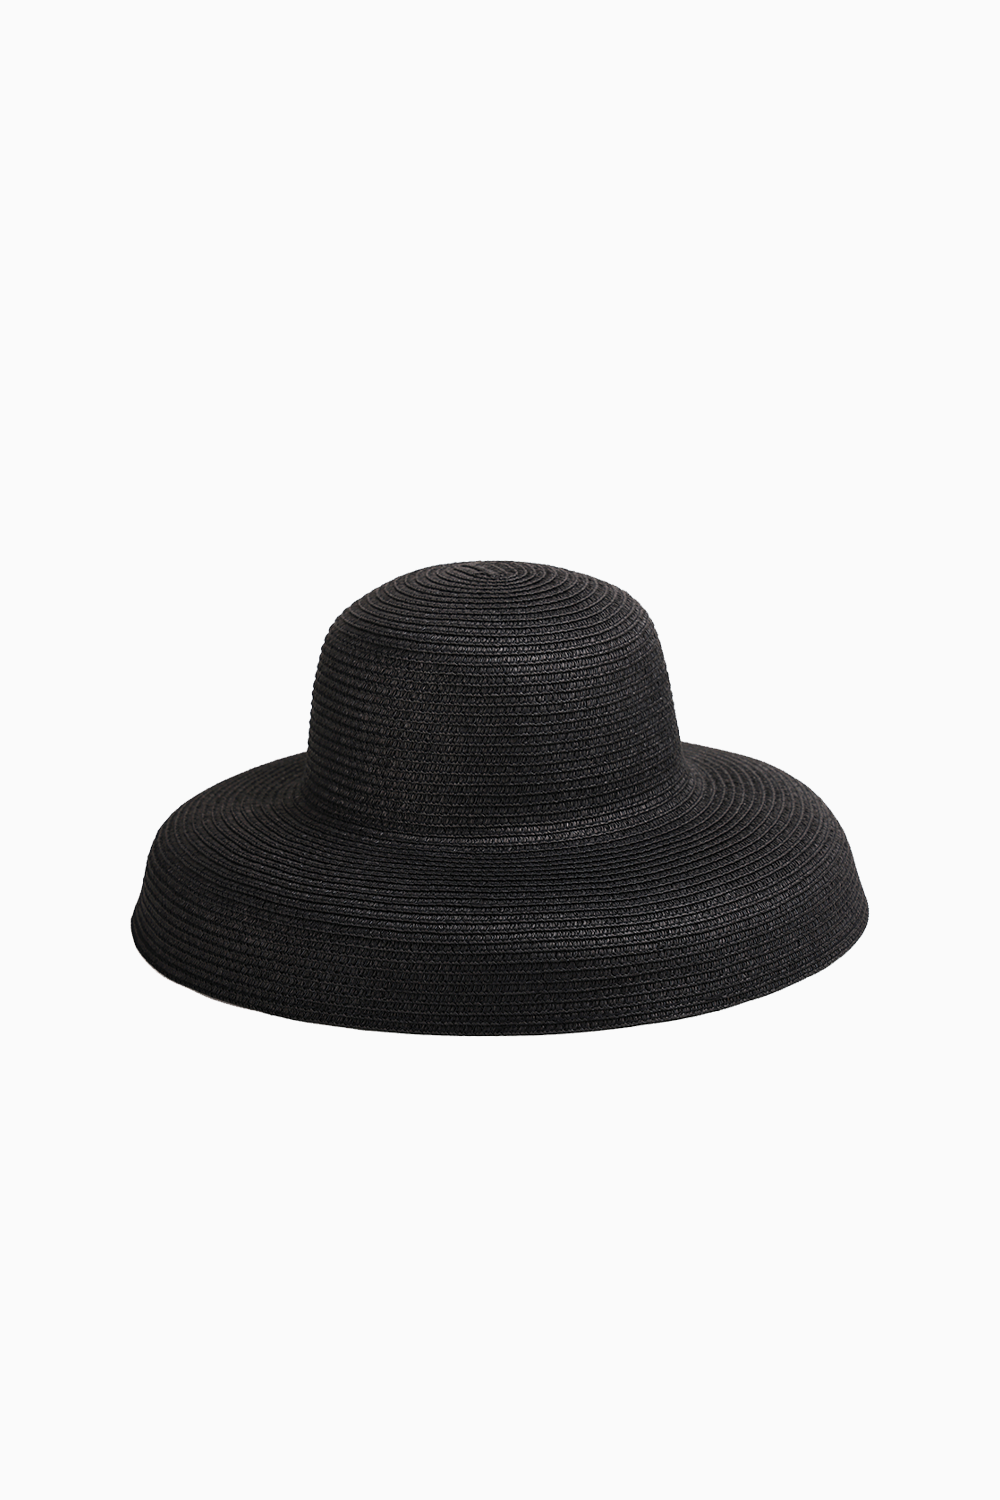 DND Black Straw Hat